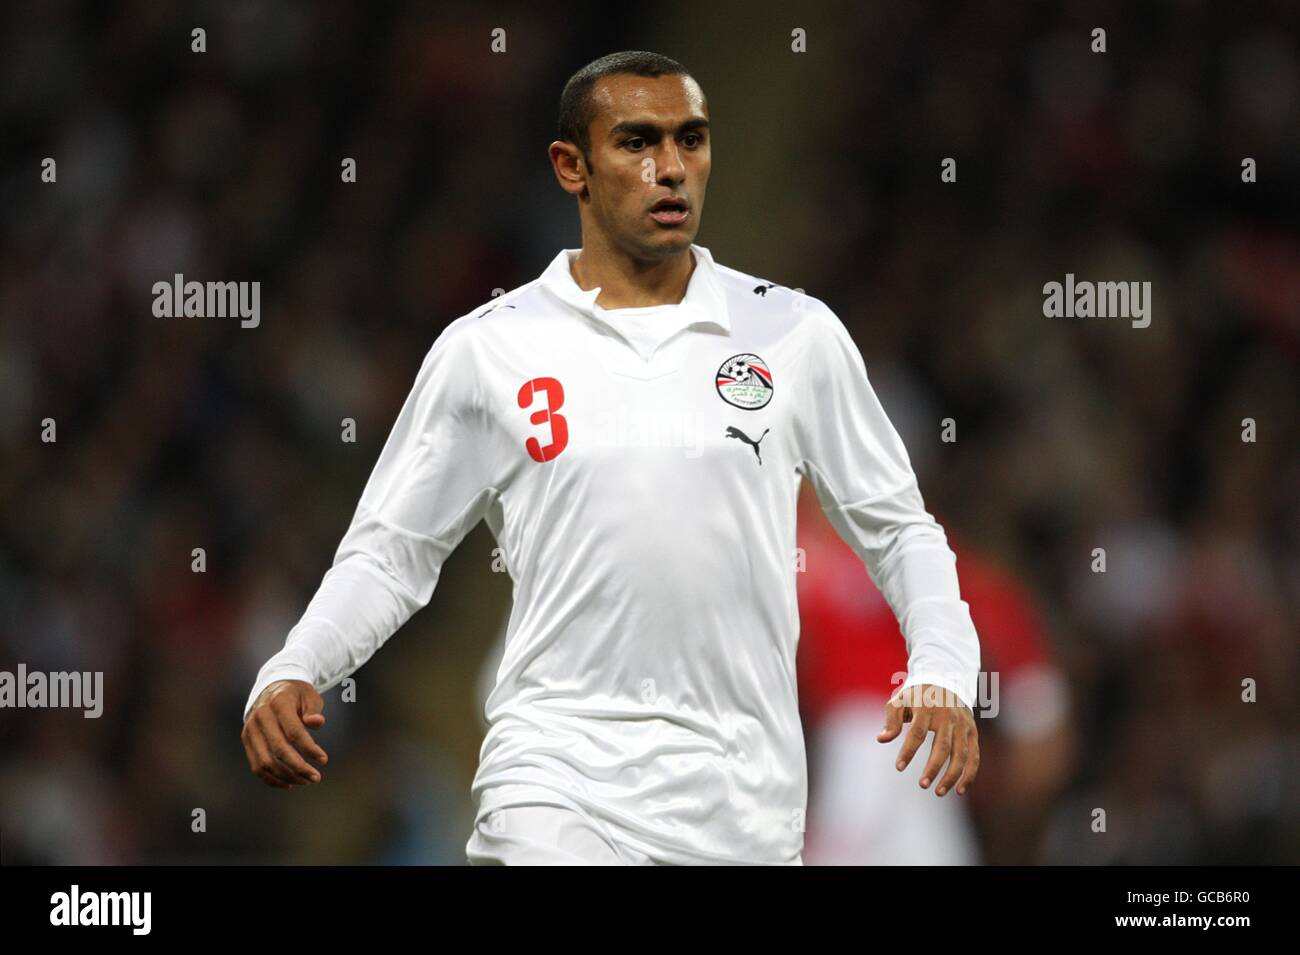 Football - International friendly - Angleterre / Egypte - Wembley Stadium. Ahmed Al-Muhammadi, Égypte Banque D'Images